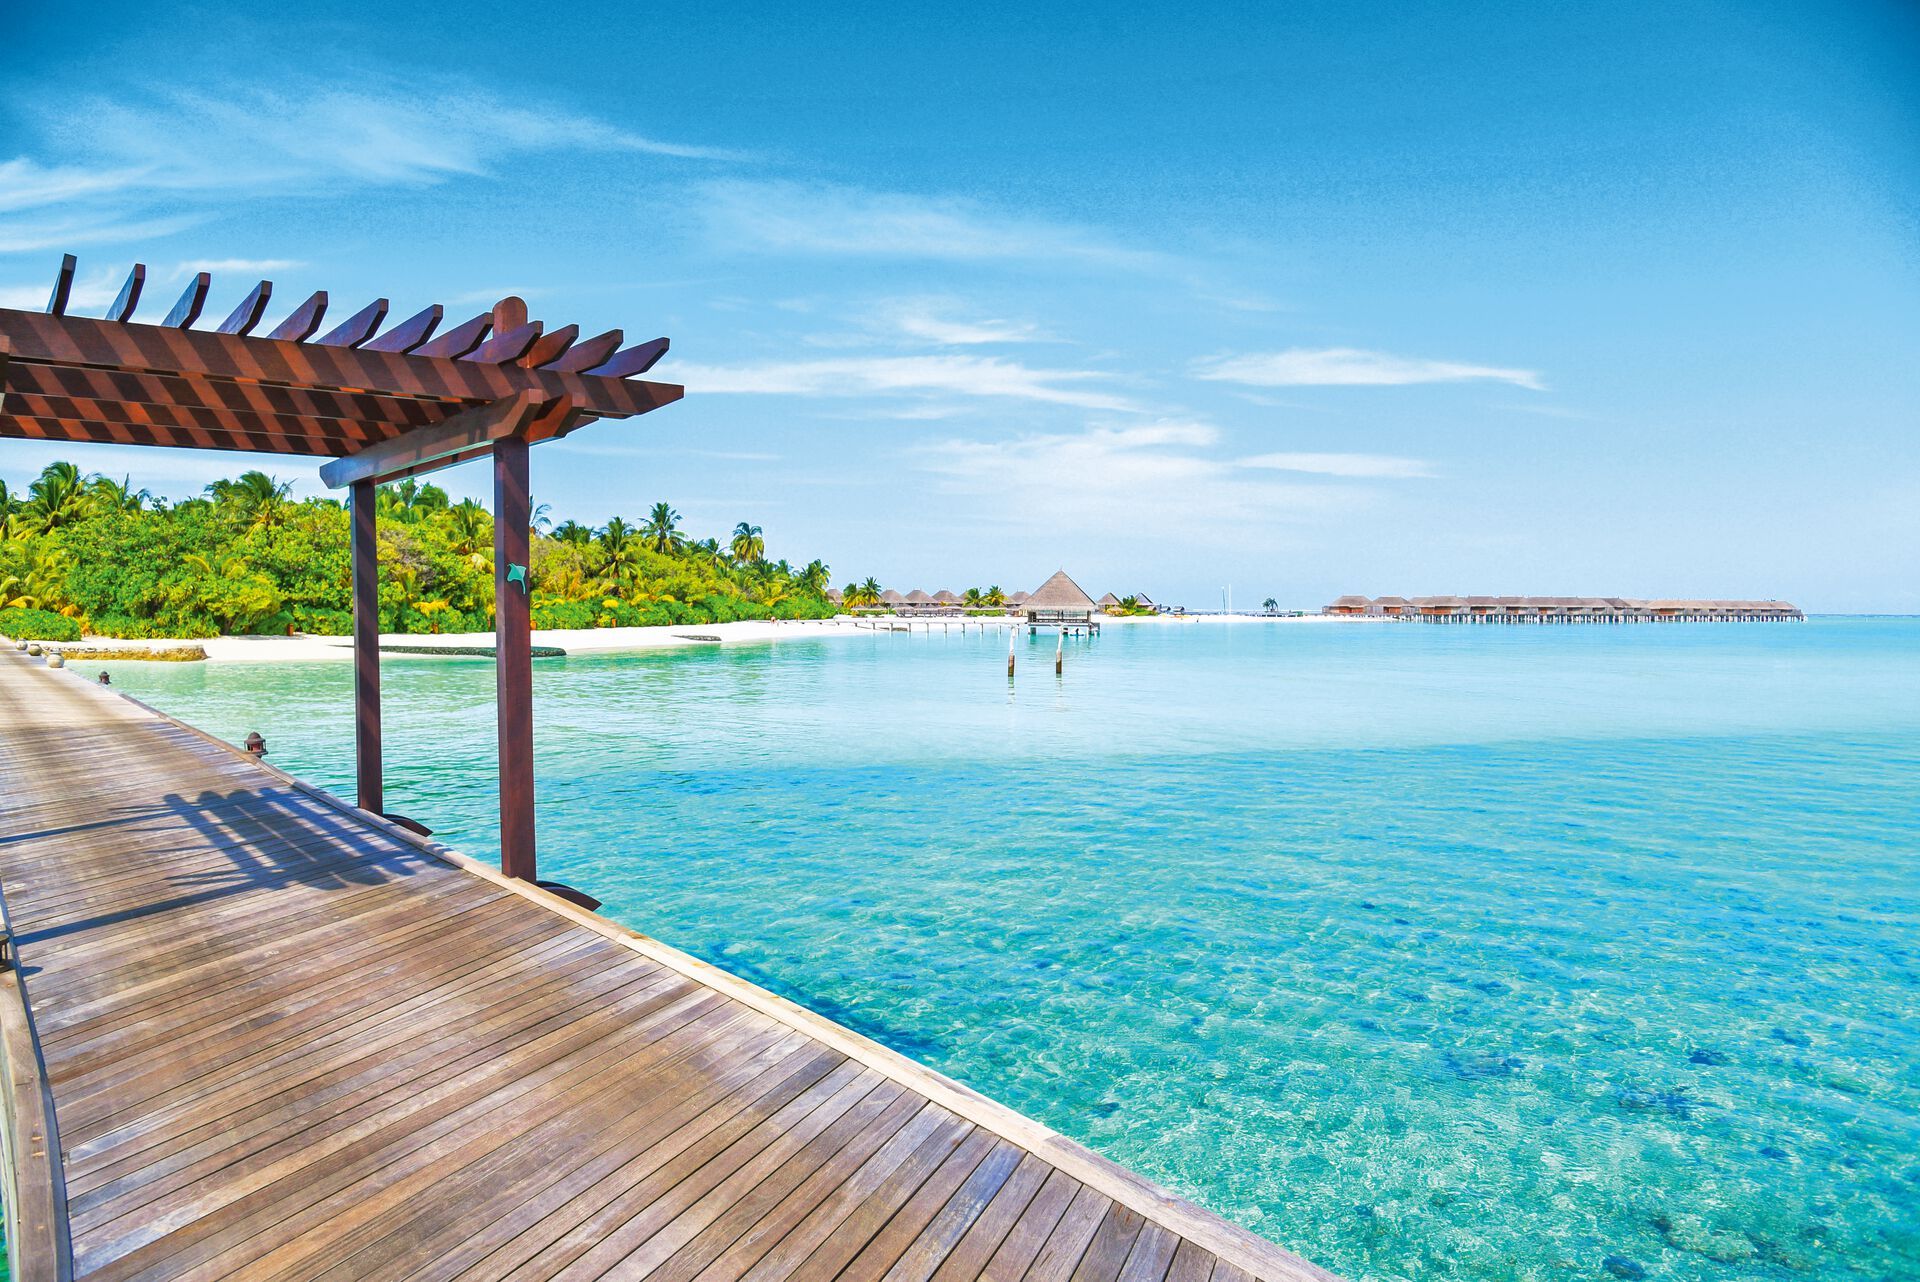 Maldives - Hotel Constance Moofushi Maldives 5* - transfert inclus